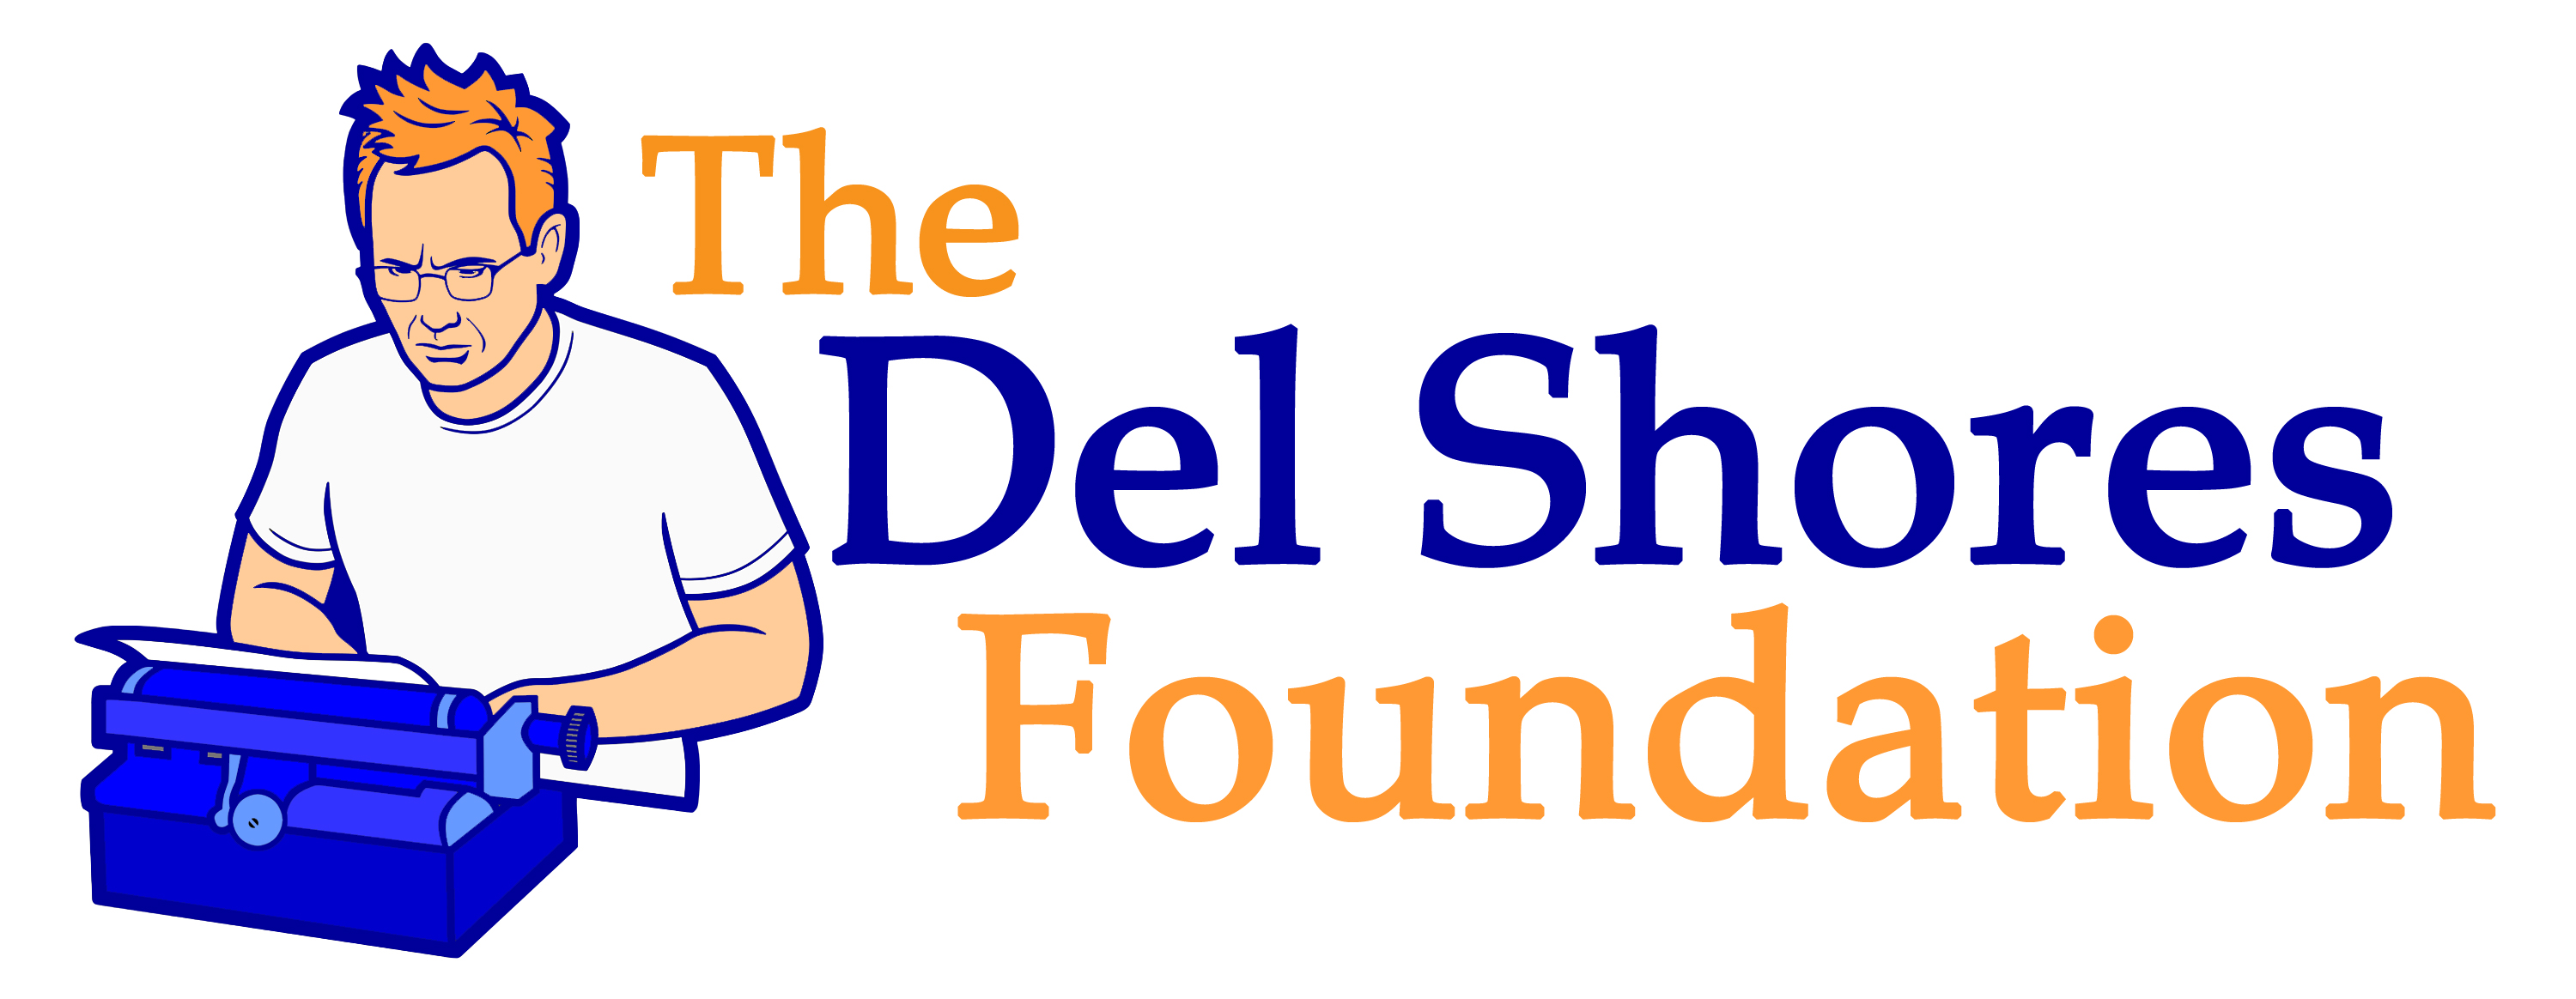 The Del Shores Foundation logo